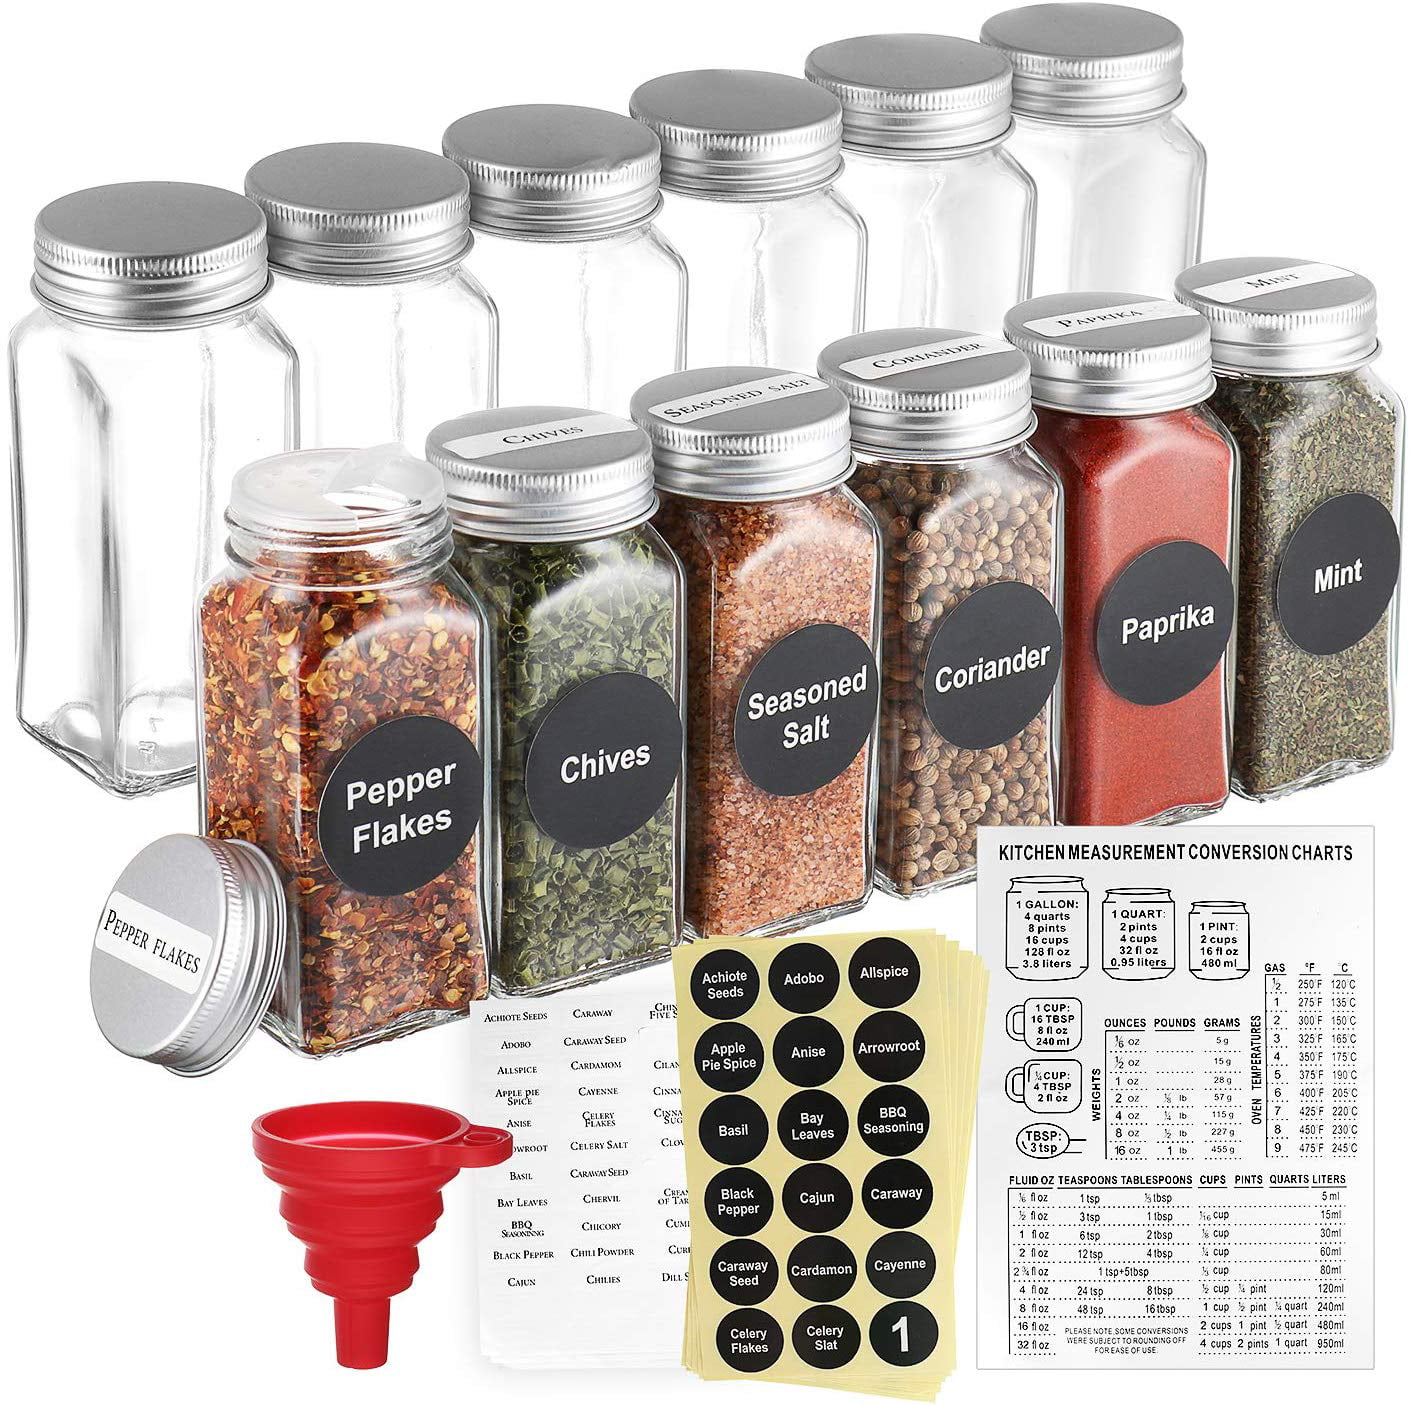 4 oz spice jars with lids